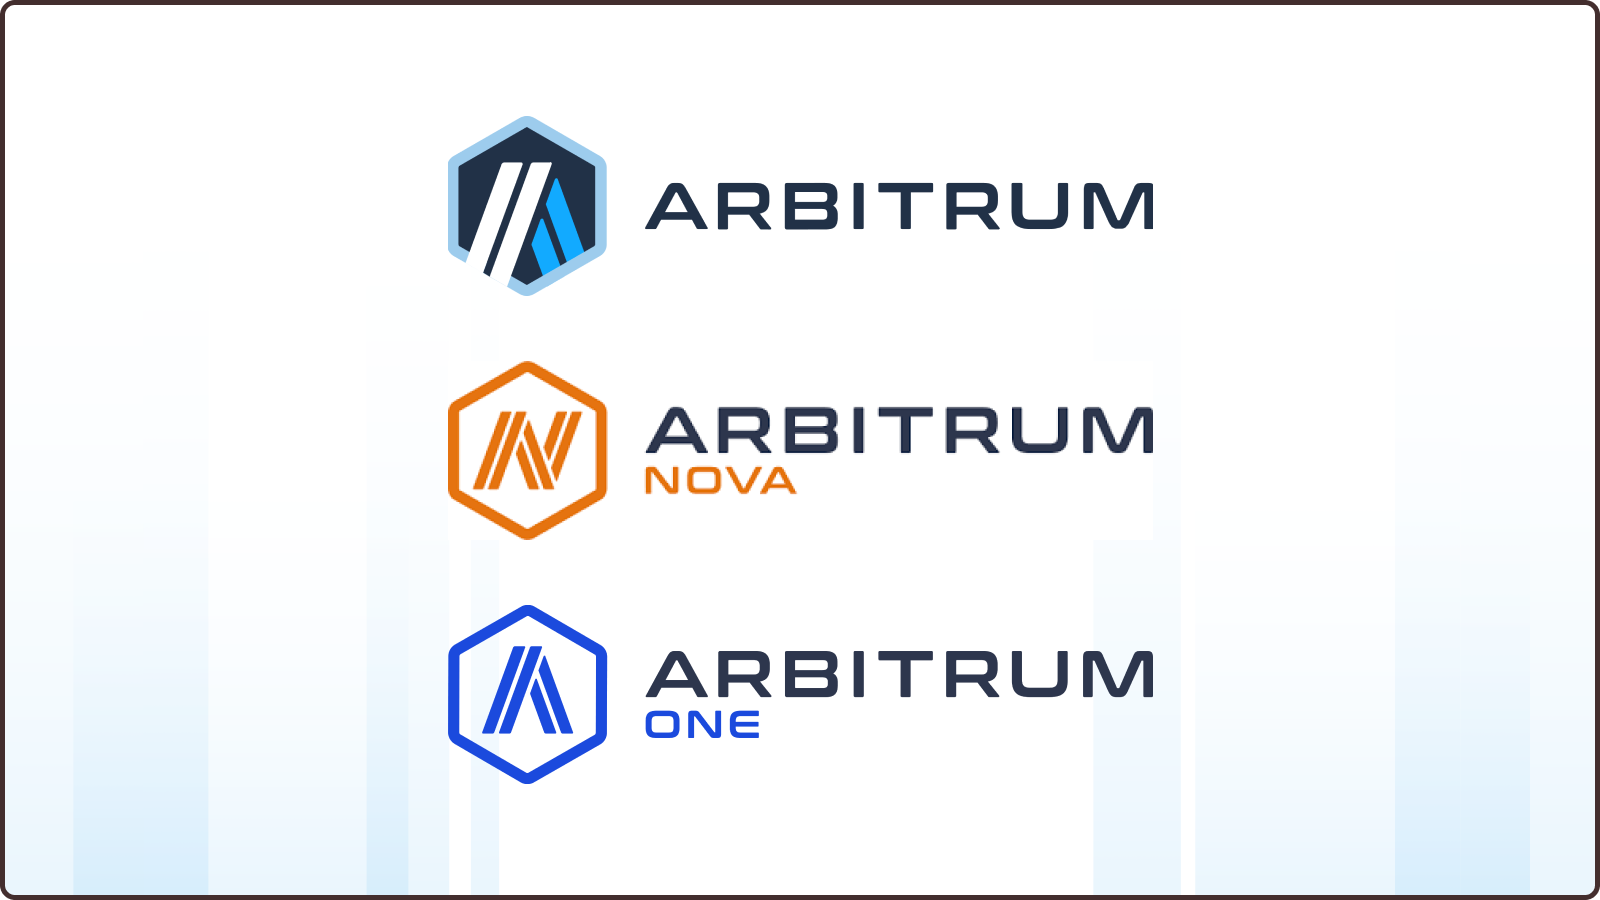 Arbitrum Network: Revolutionizing Ethereum's Layer 2